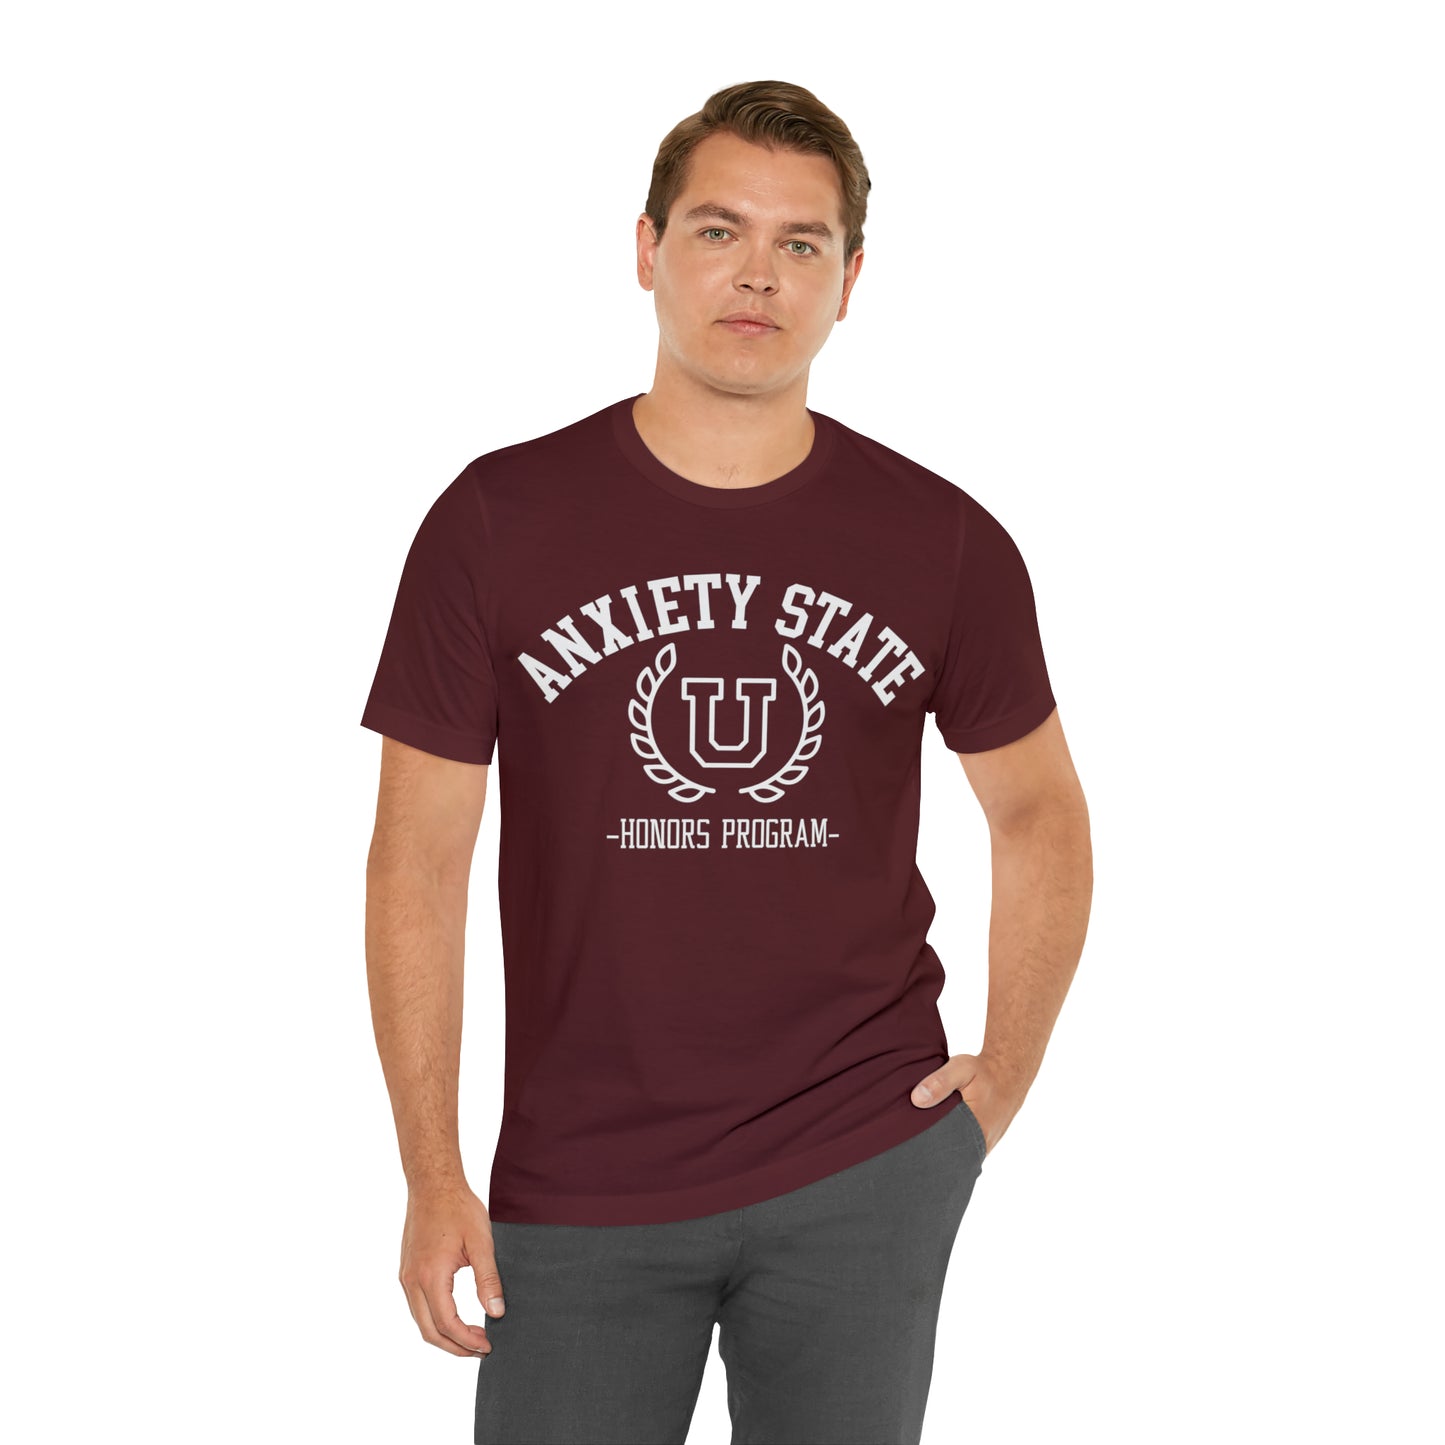 Anxiety State Honors Program Tshirt, Mental Health Matters, Its Okay To Not Be Okay, Depression Honors Program Humor